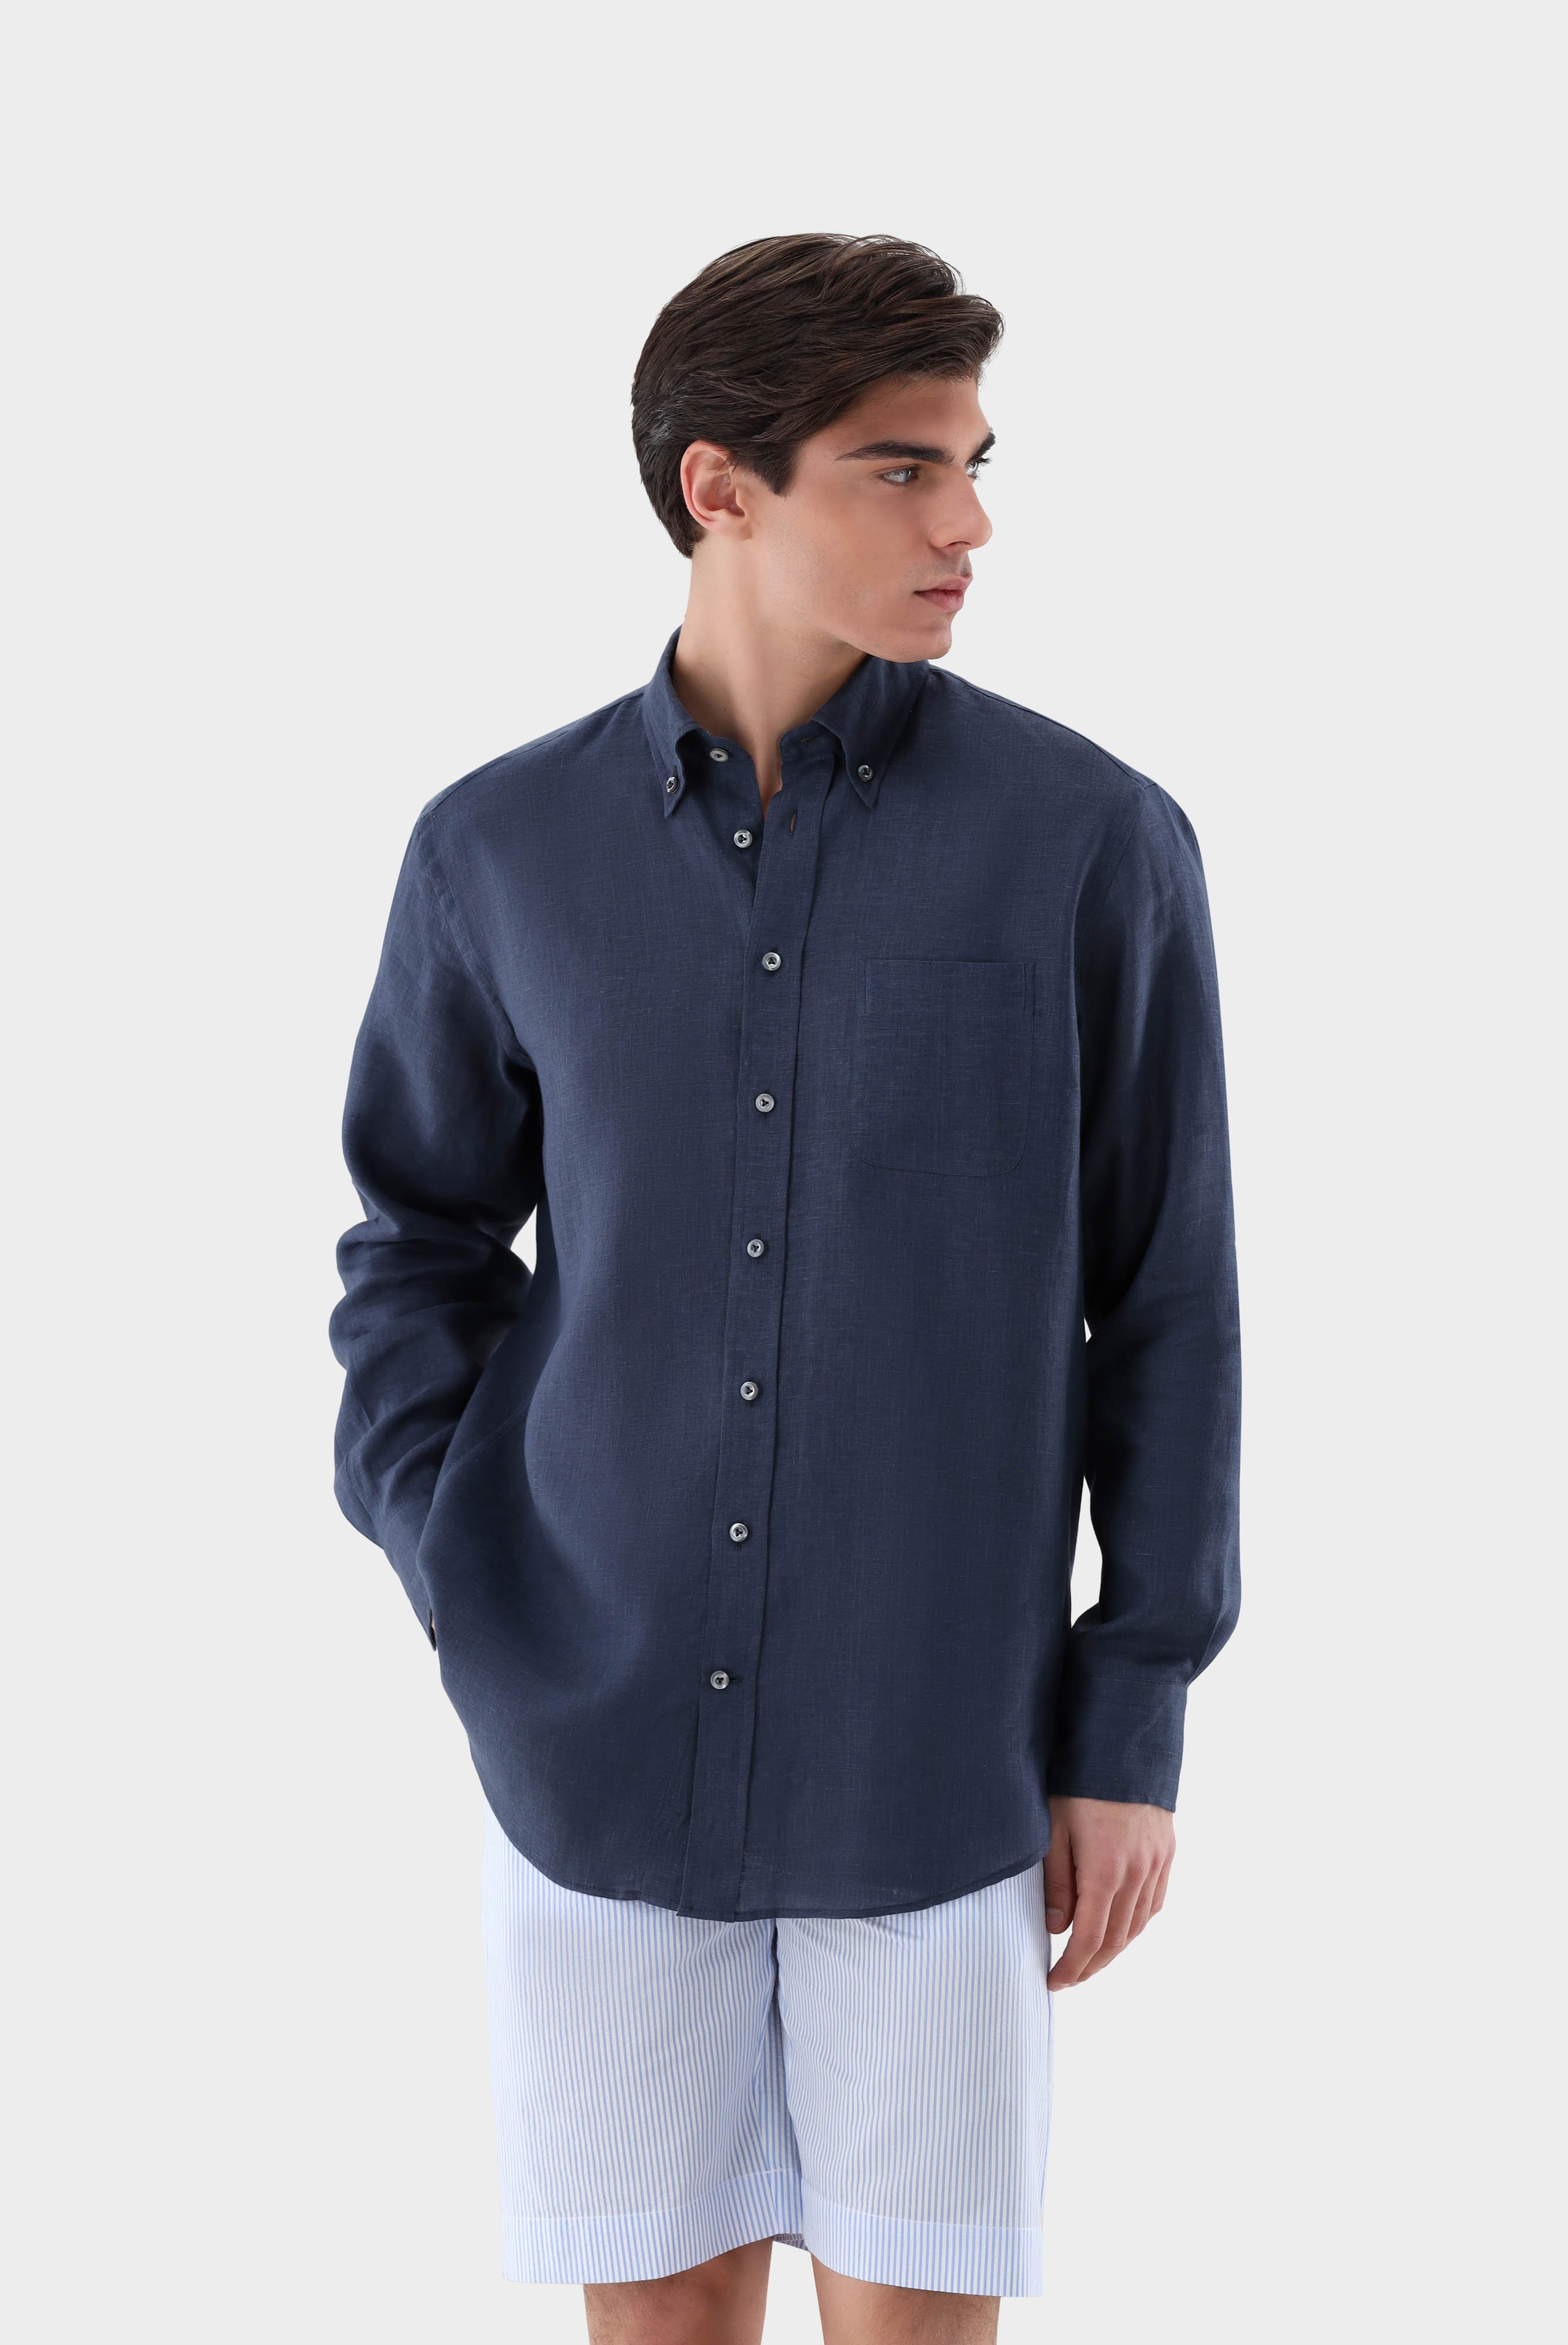 Casual Shirts+Linen Button-Down Collar Shirt+20.2026.9V.150555.785.45